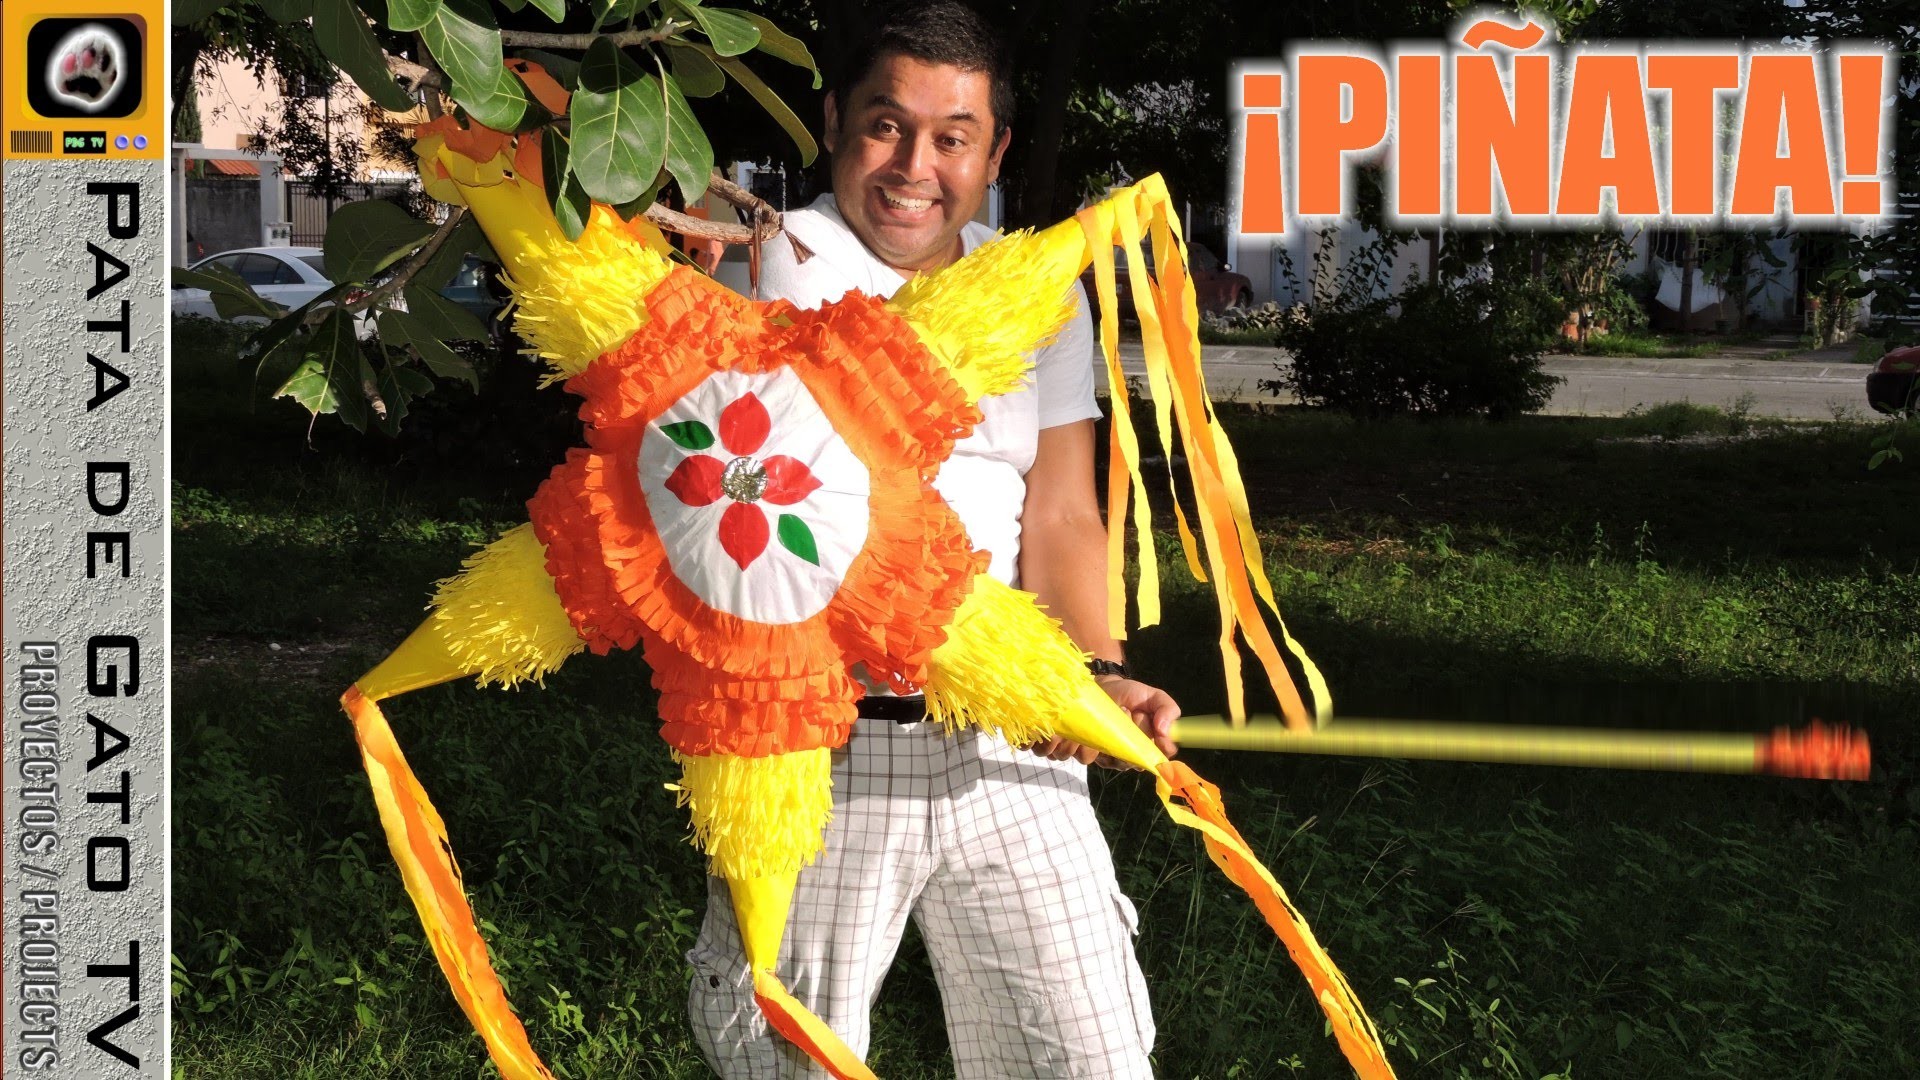 ¡Haz tu propia piñata!. Make your own pinata!